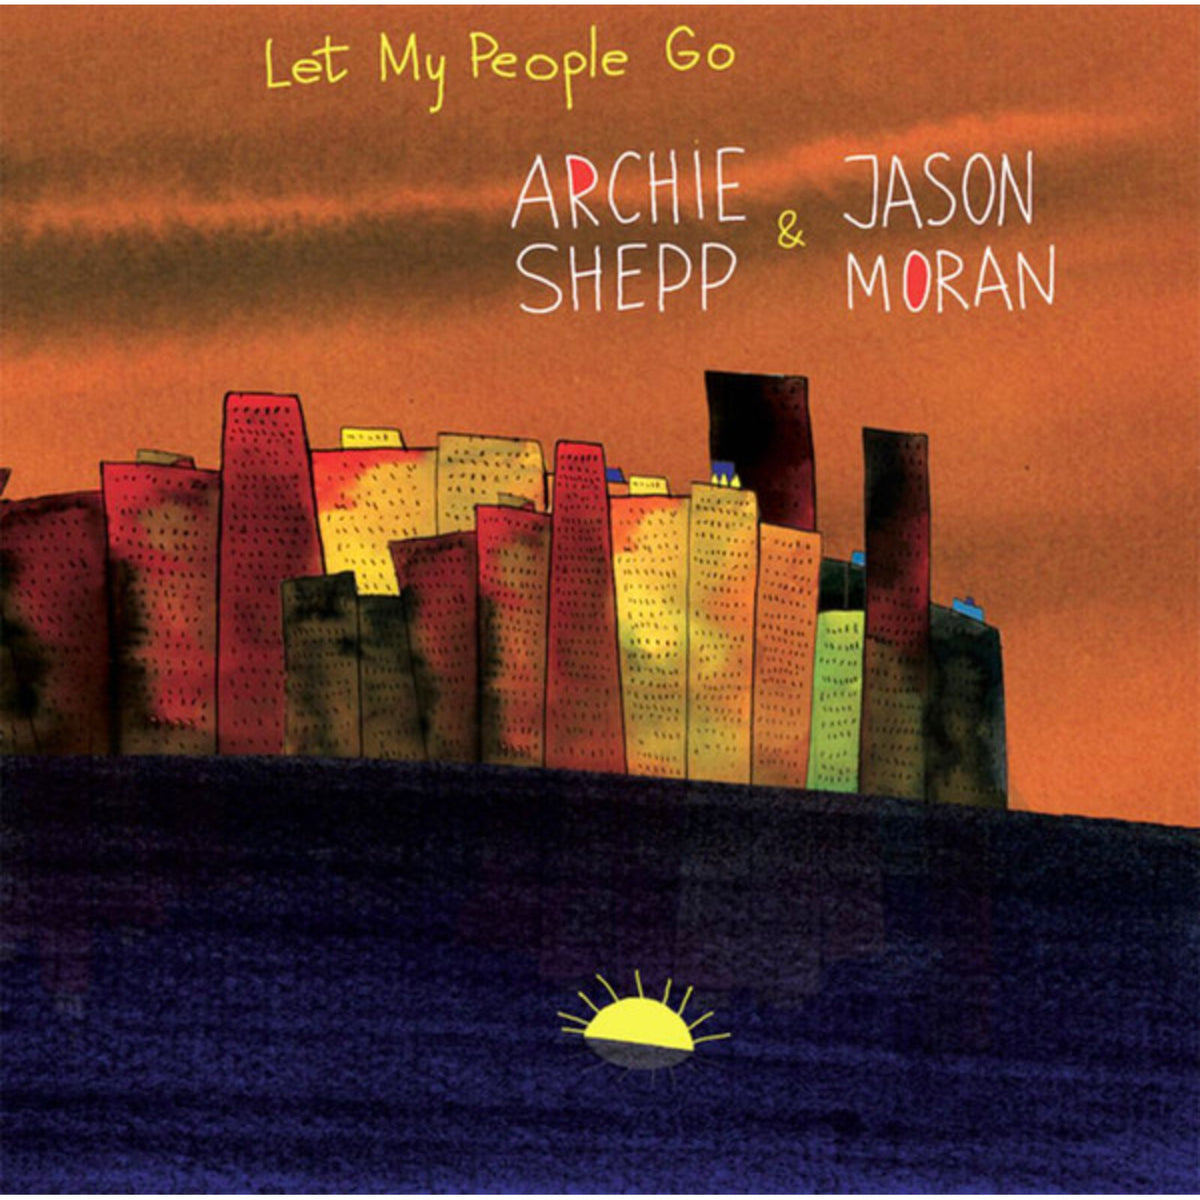 Archie Shepp & Jason Moran - Let My People Go - ARCH2101